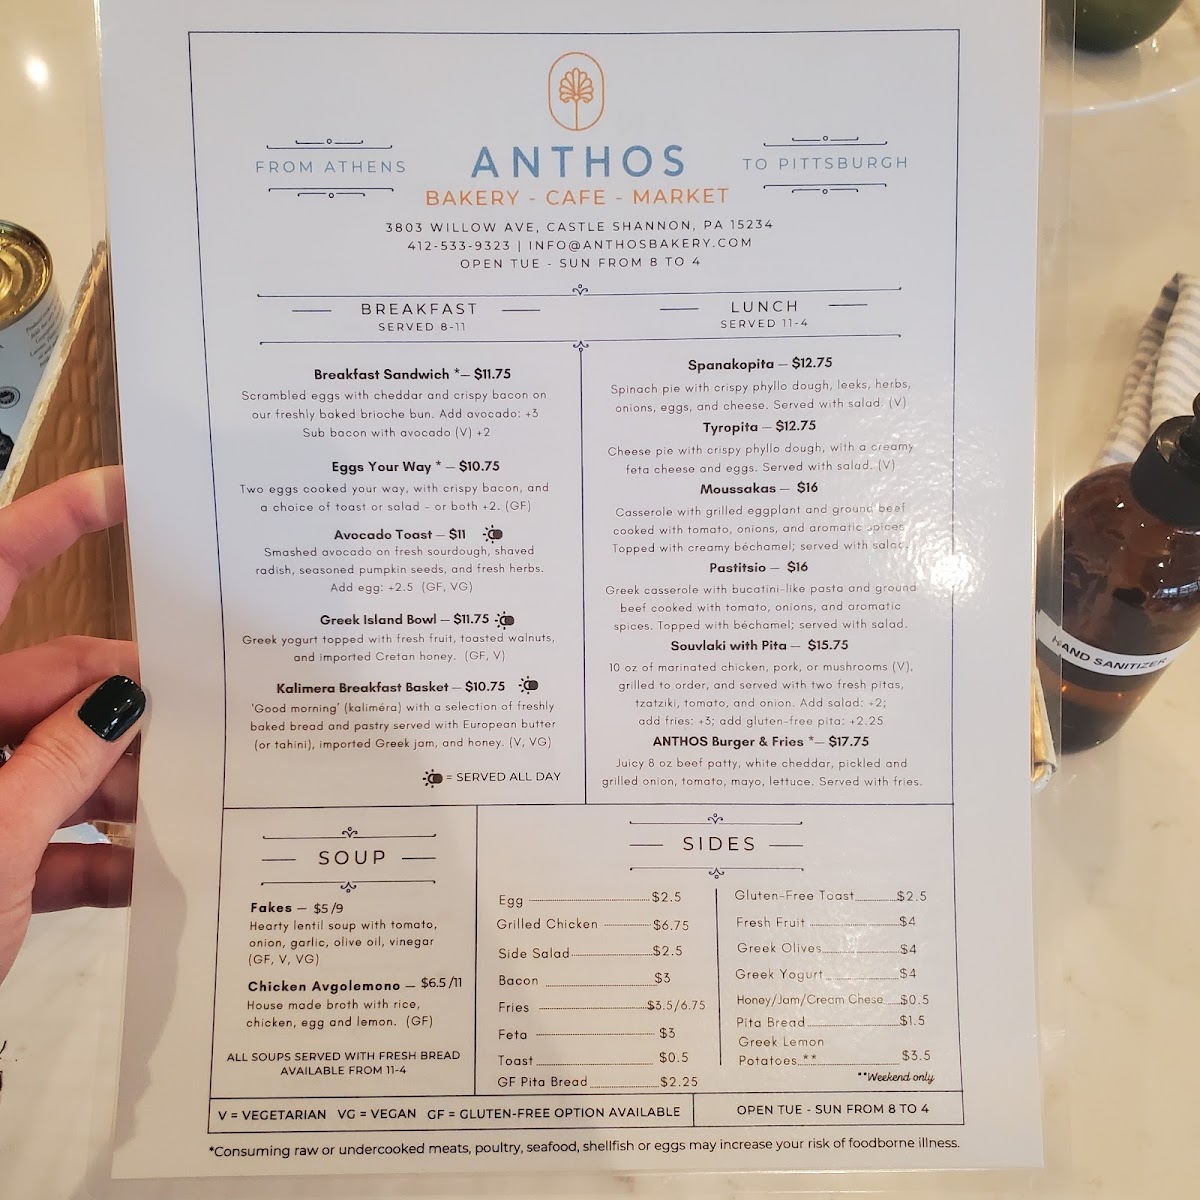 Anthos Bakery & Café gluten-free menu